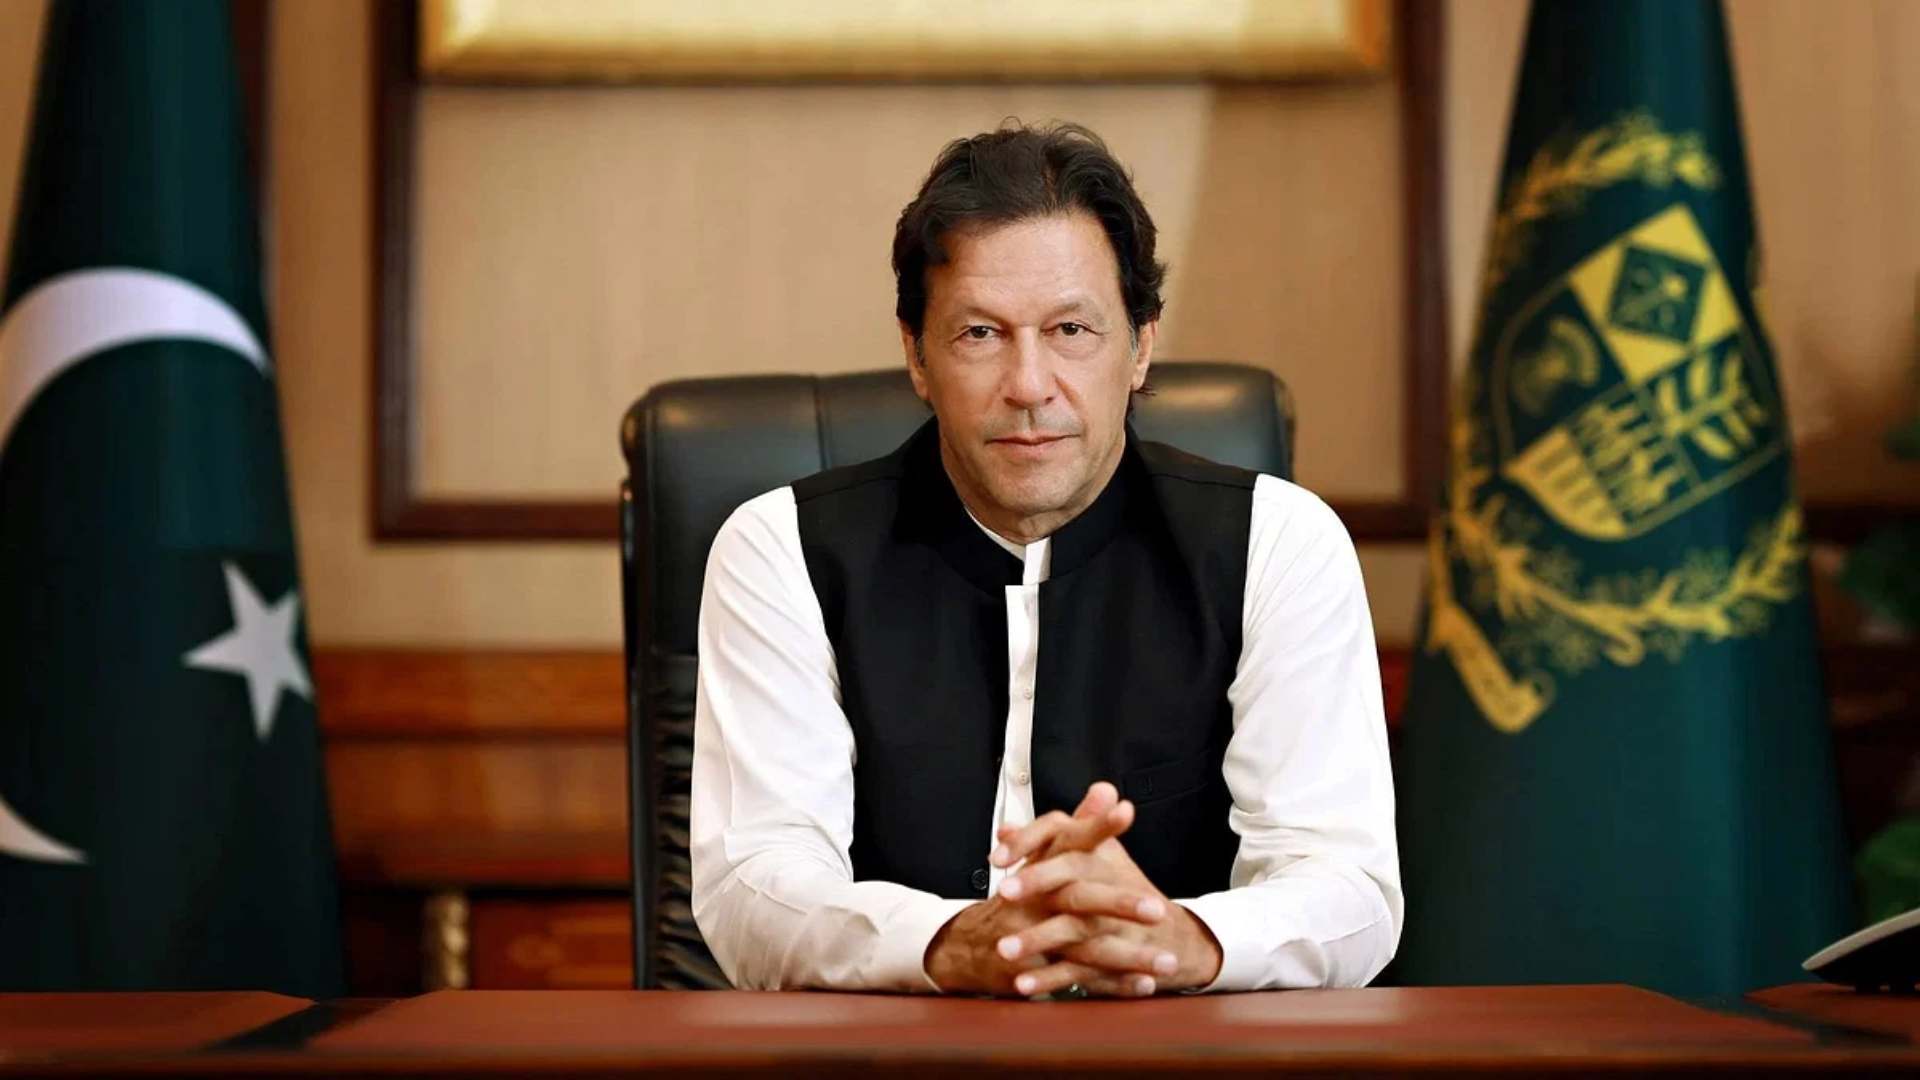 Punjab Govt Targets Imran Khan Amid Rising Tensions